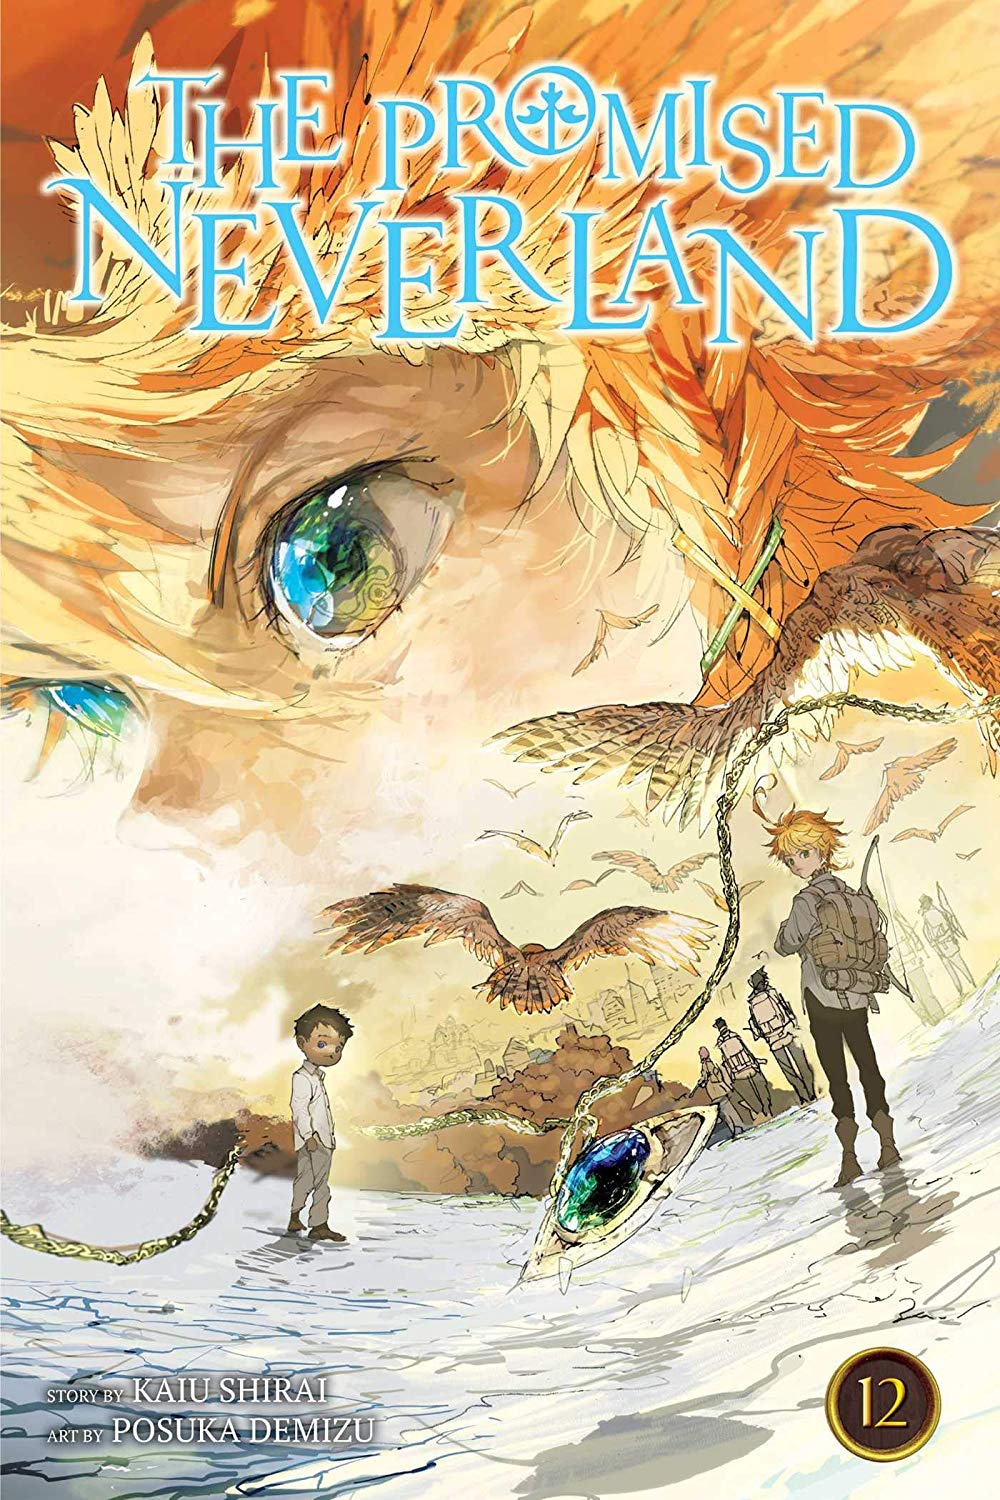 Volume 19, The Promised Neverland Wiki, Fandom